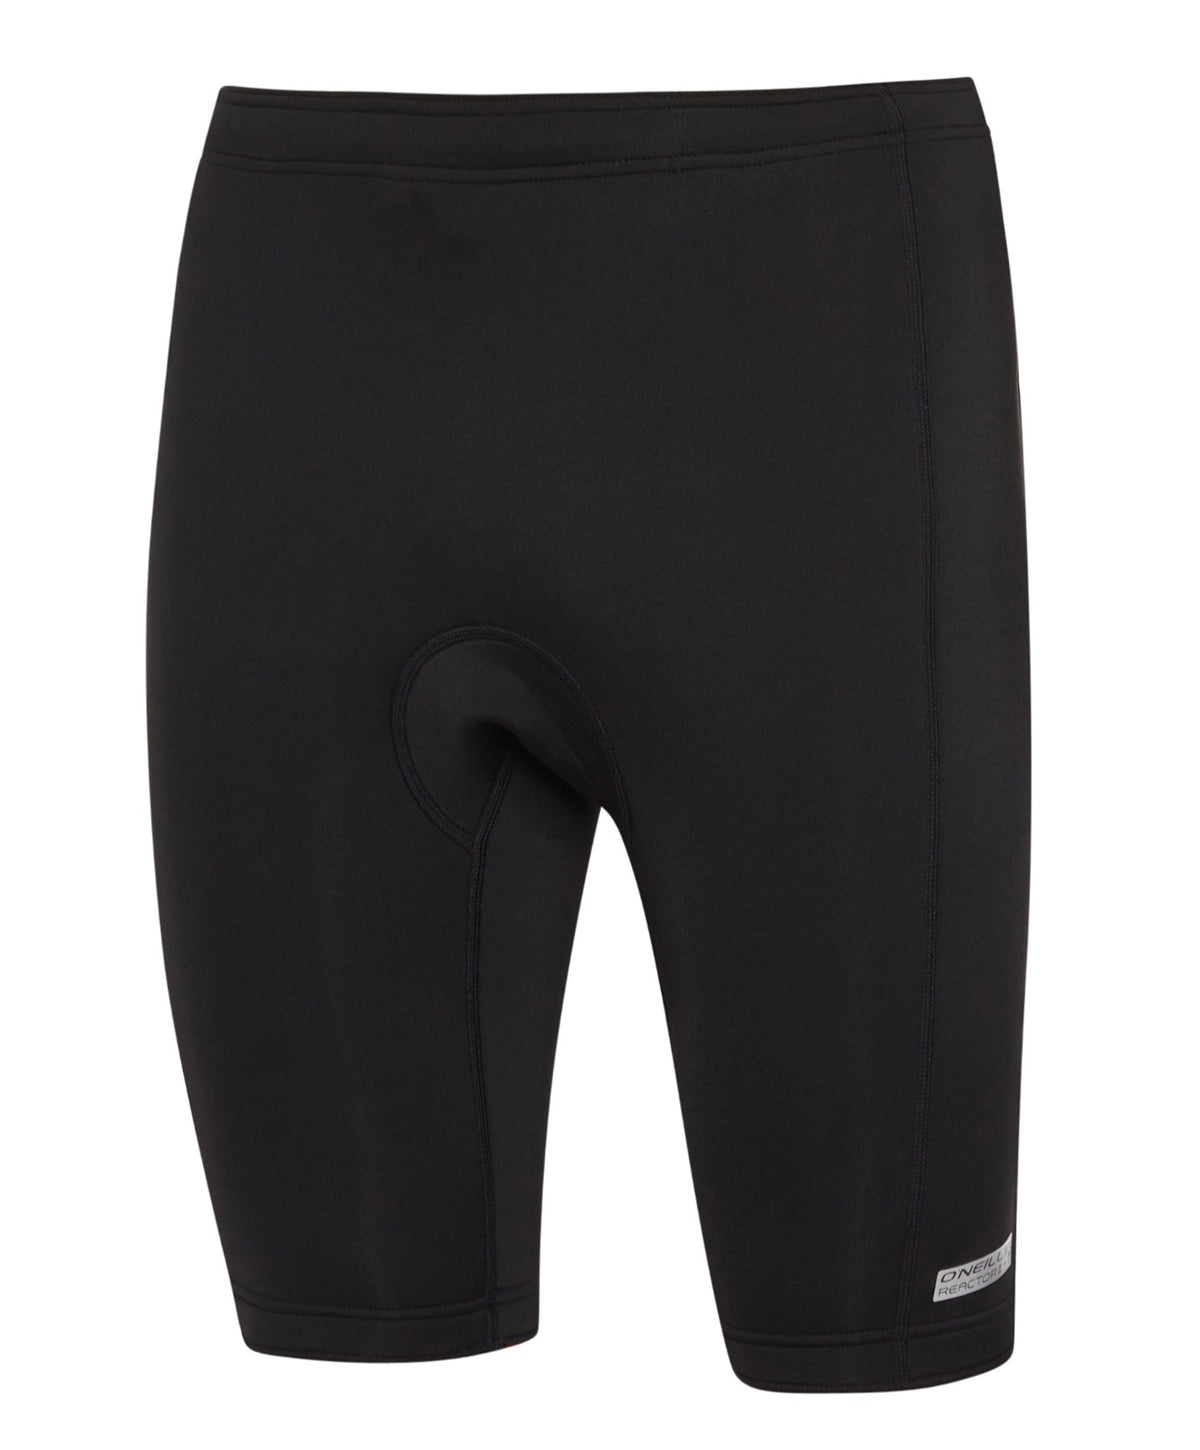 Reactor 1.5mm Wetsuit Shorts - Black